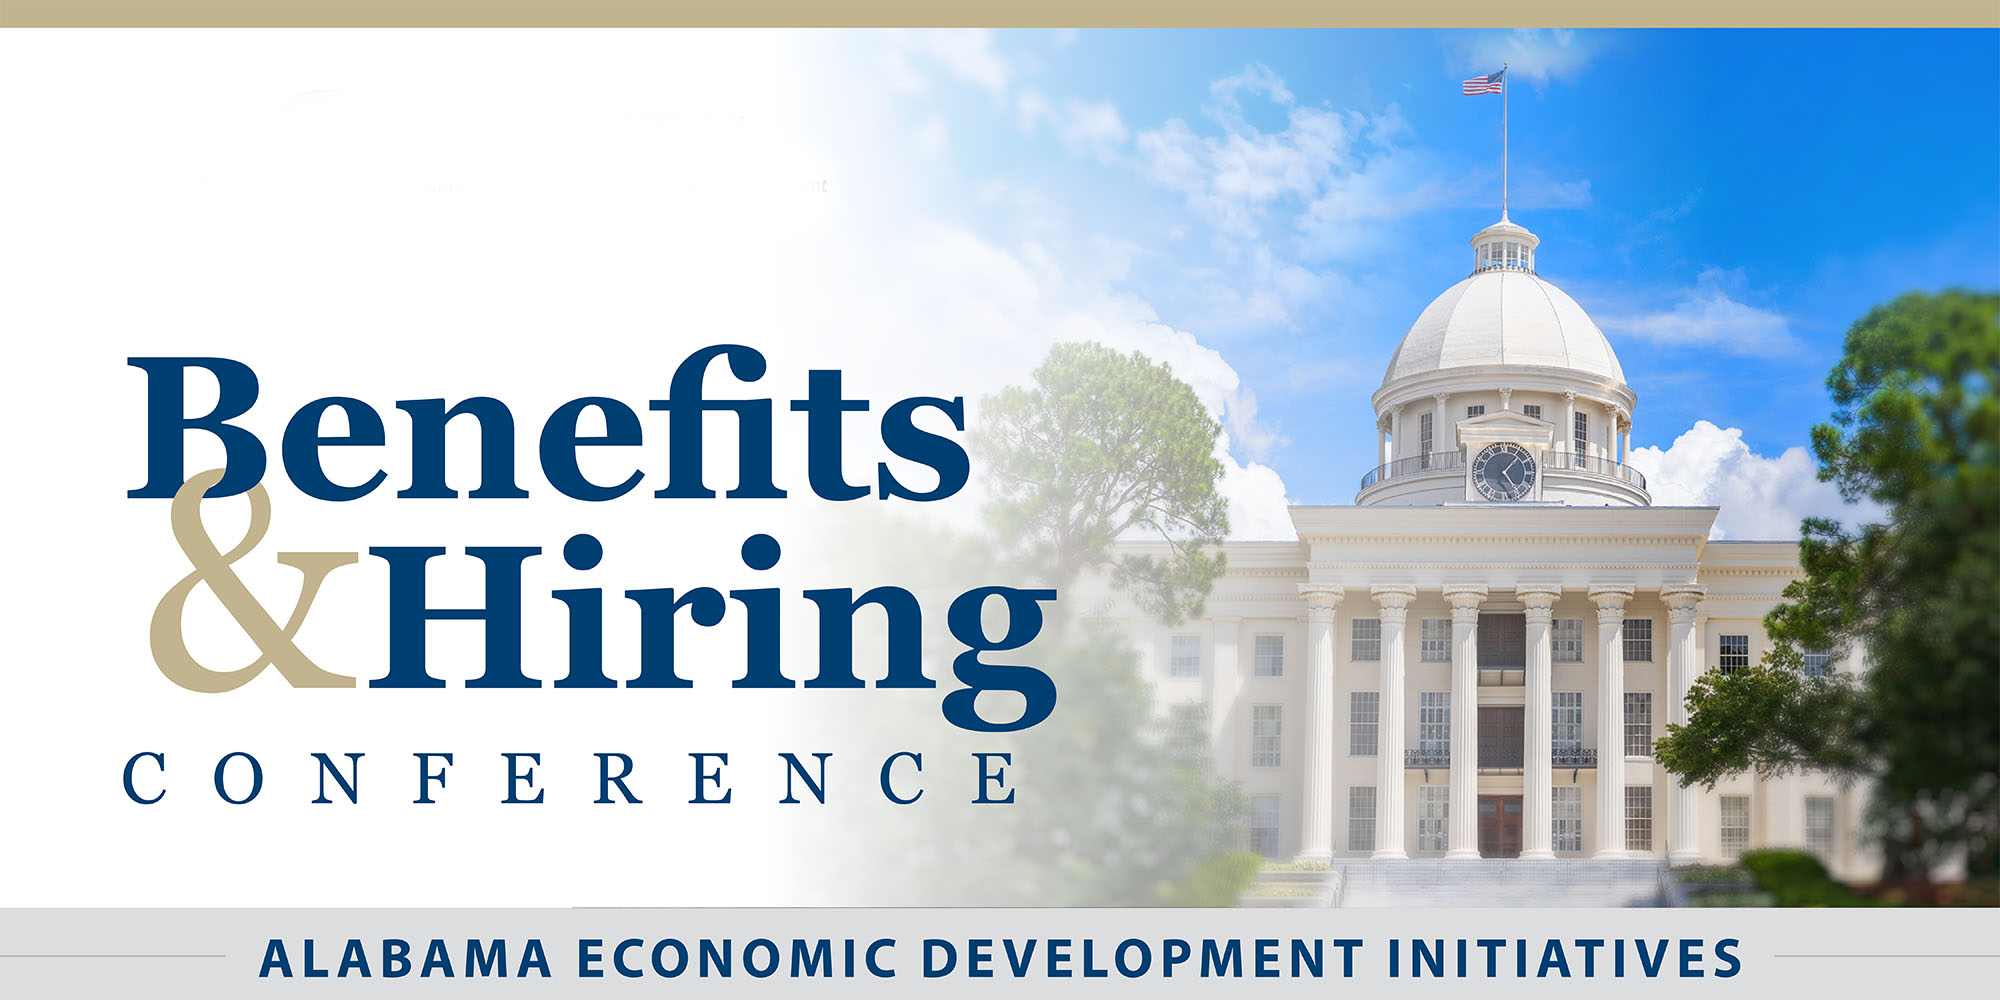 Benefits and Hiring Conference. Alabama Economic Development Initiatives.